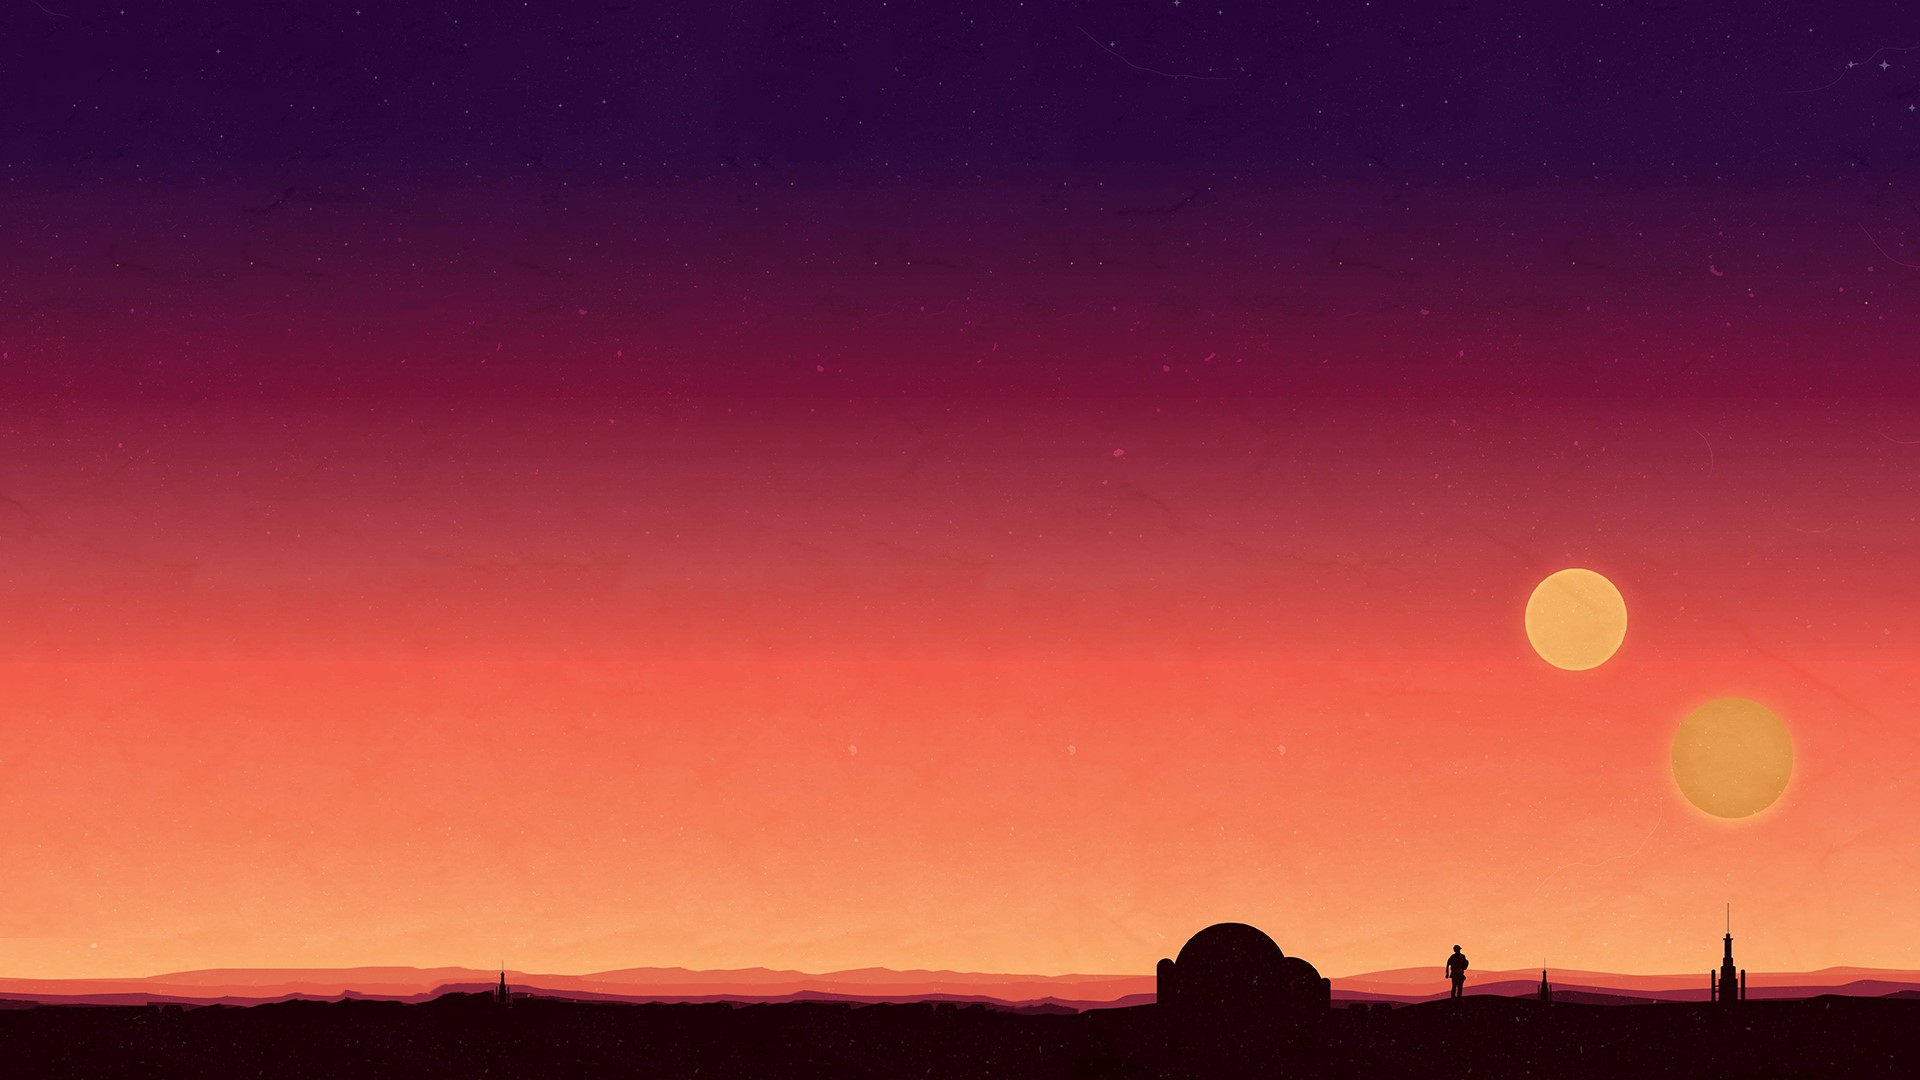 General 1920x1080 Tatooine minimalism sunset film stills movies science fiction sky artwork Star Wars Star Wars: Episode IV - A New Hope